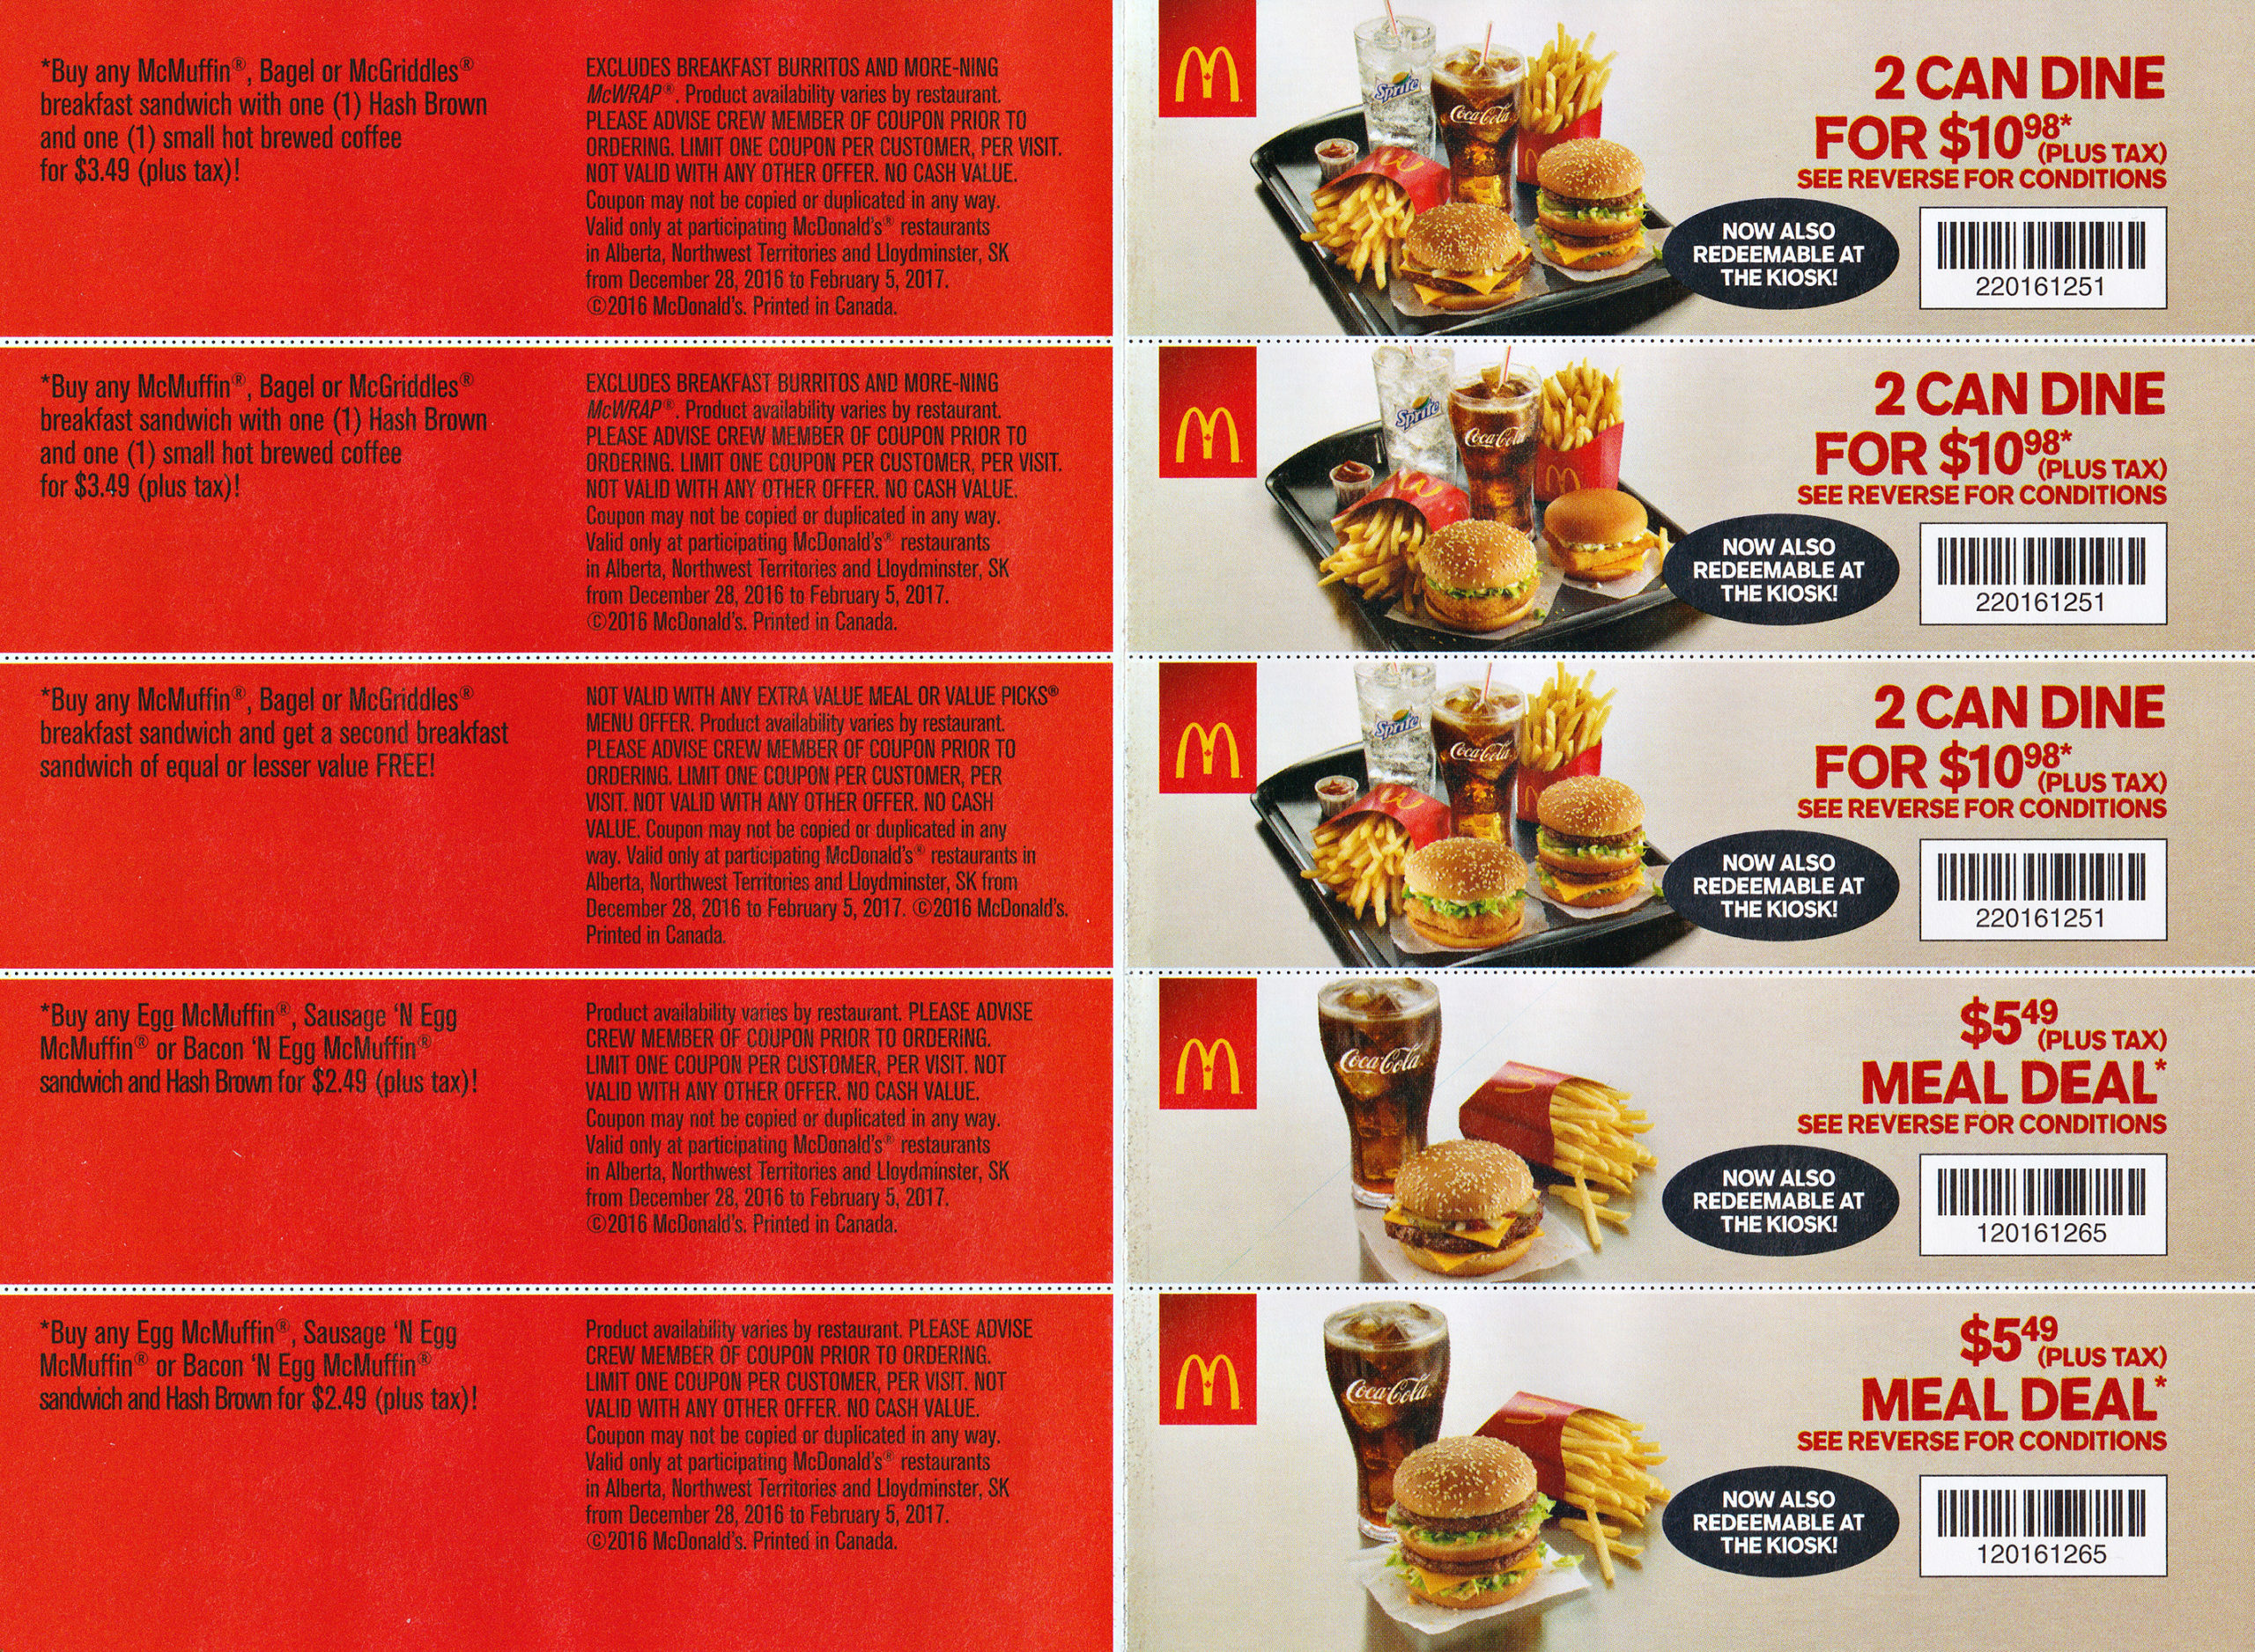 fries-burgers-mcdonlds coupon codes-2020